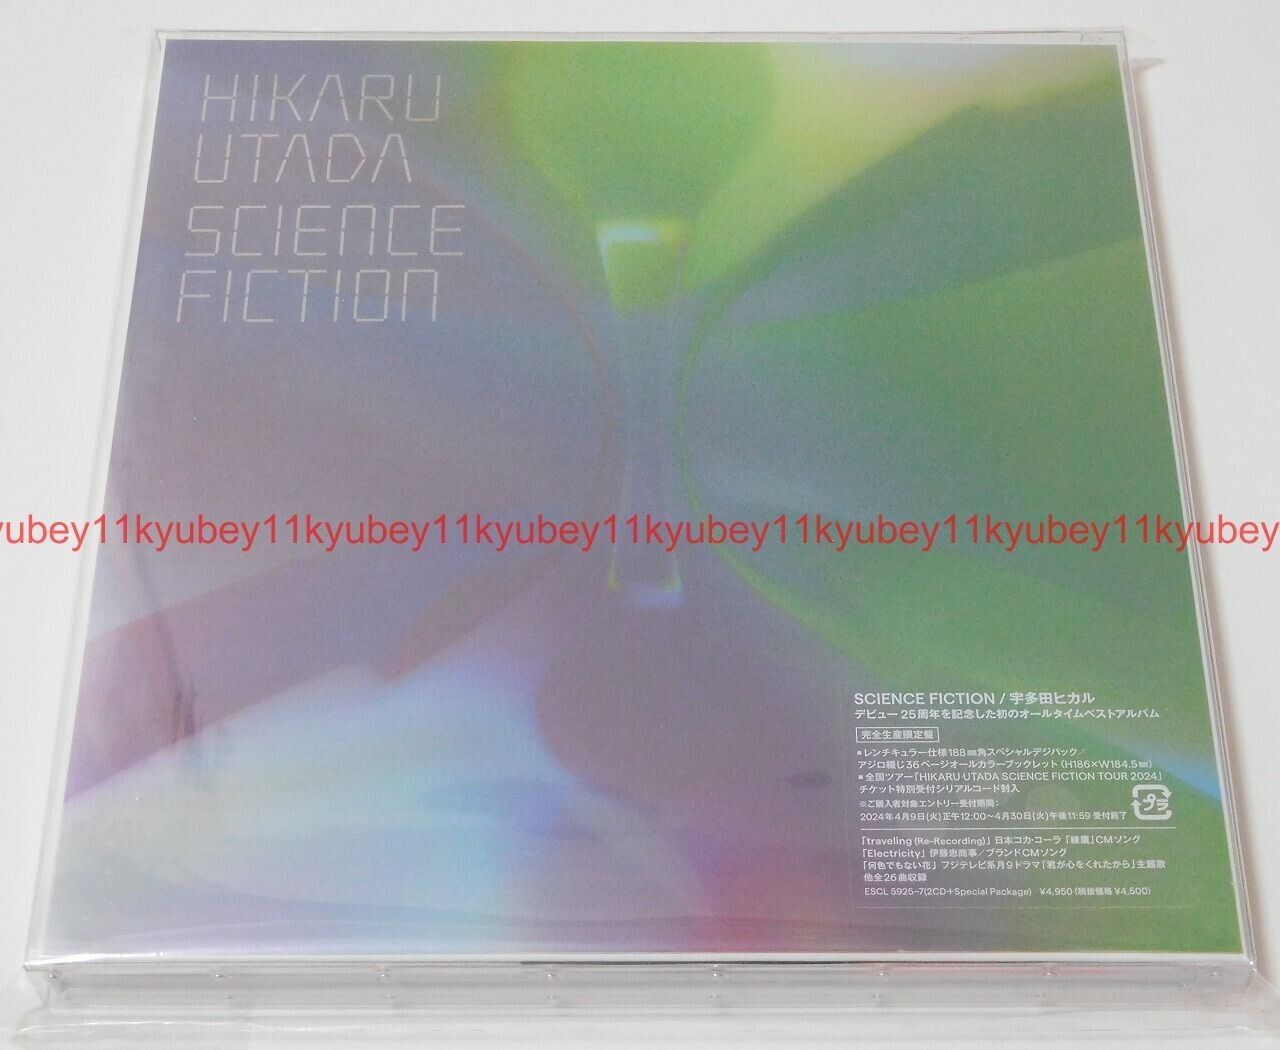 New Hikaru Utada SCIENCE FICTION Limited Edition 2 CD Booklet Japan ESCL-5925